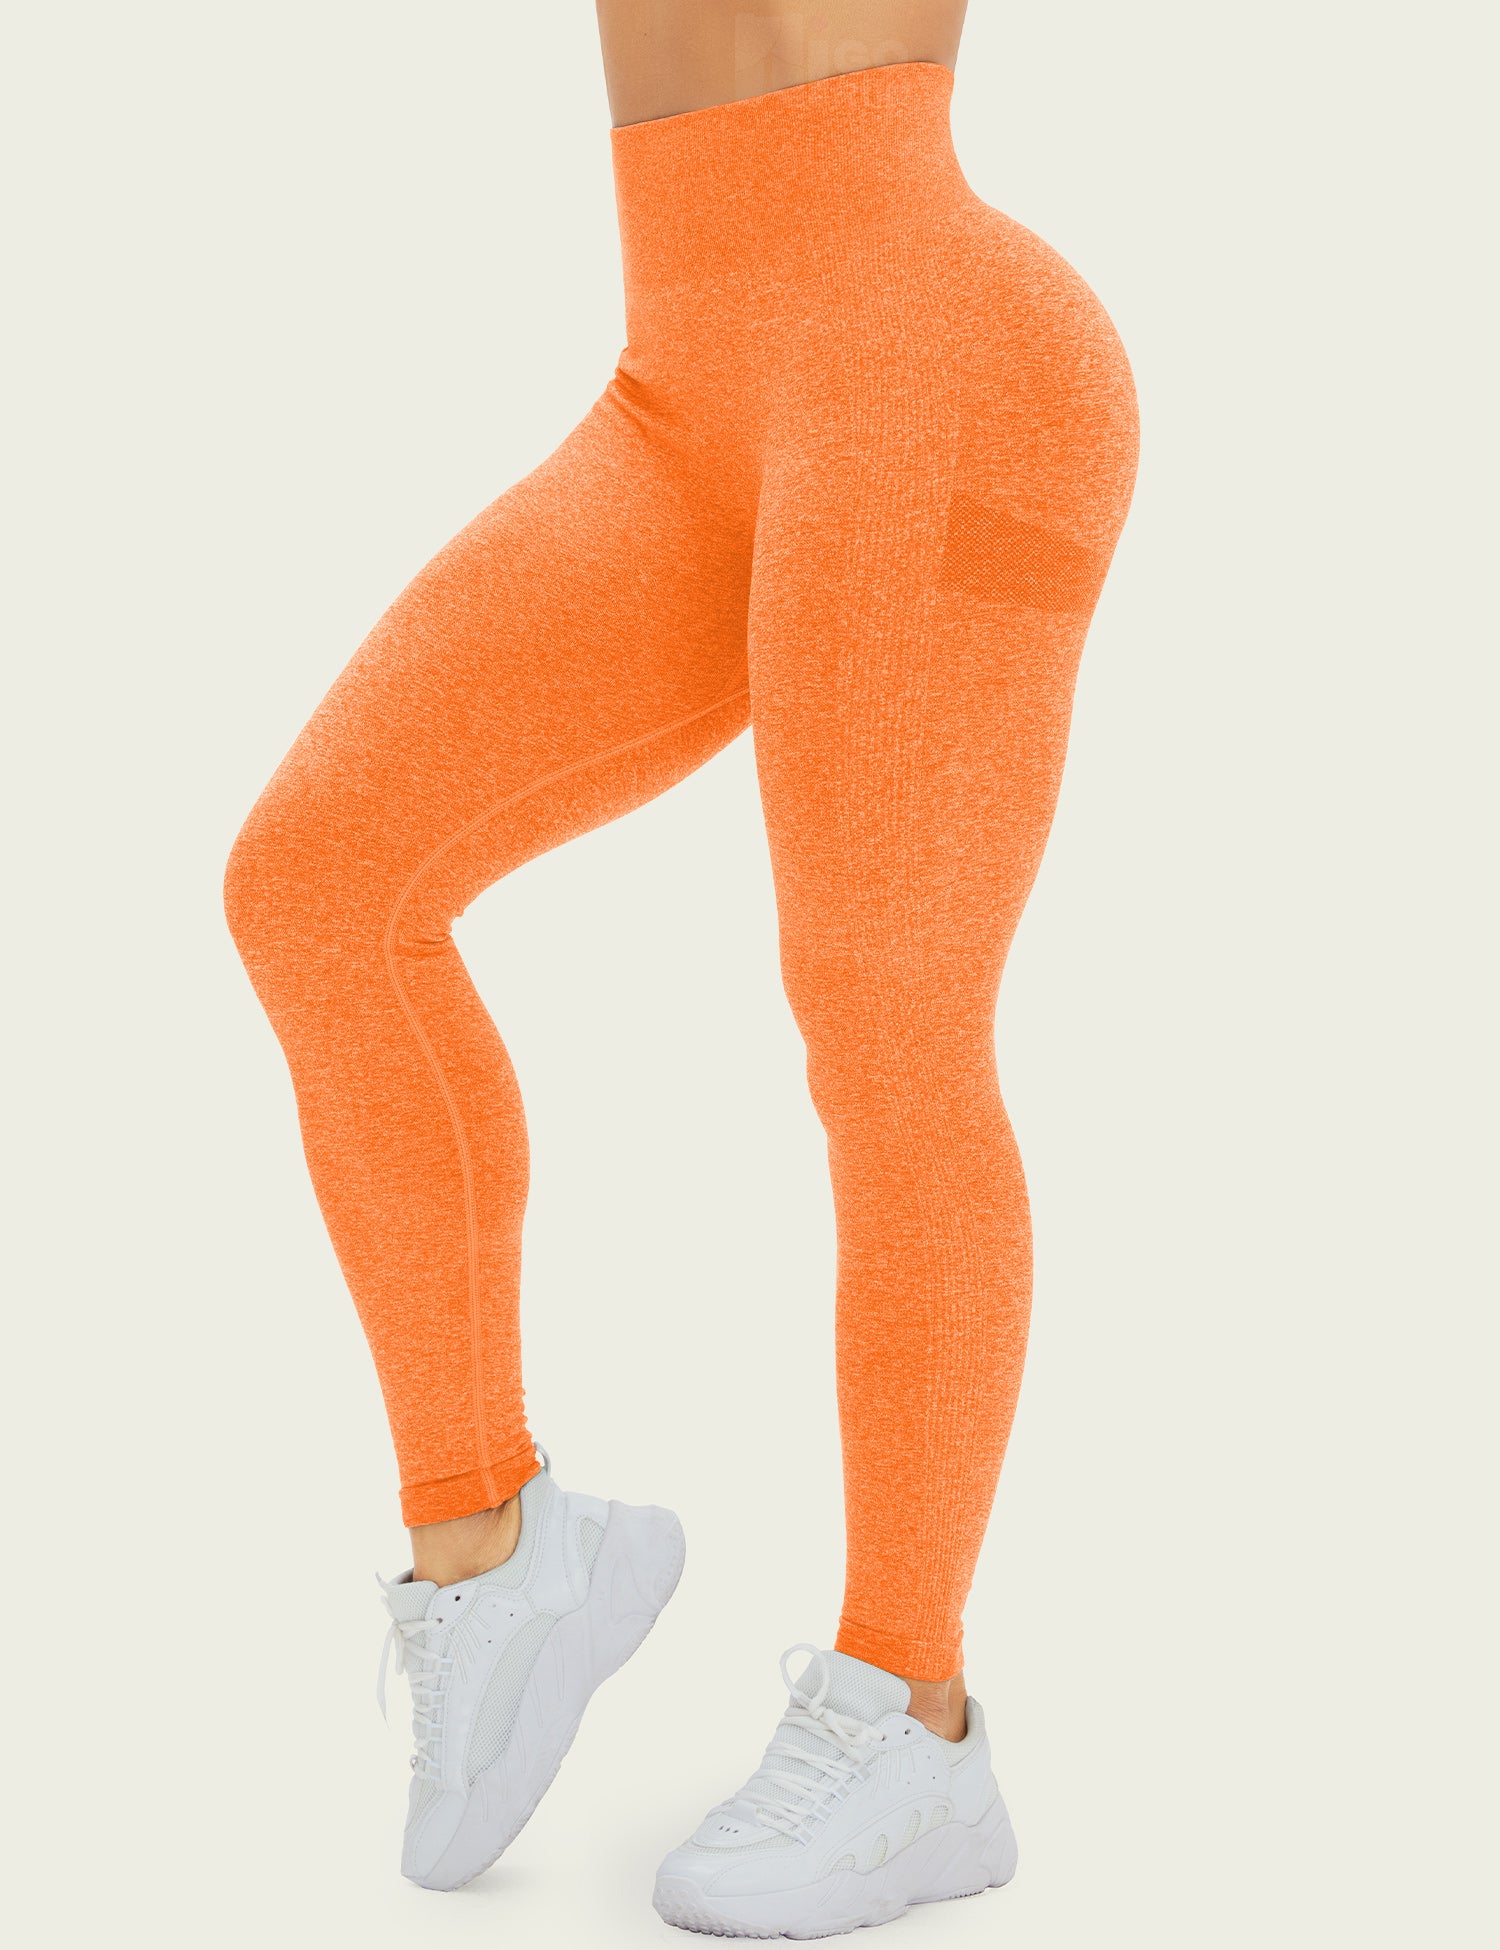  HIGORUN Tie Dye Workout Seamless Leggings for Women